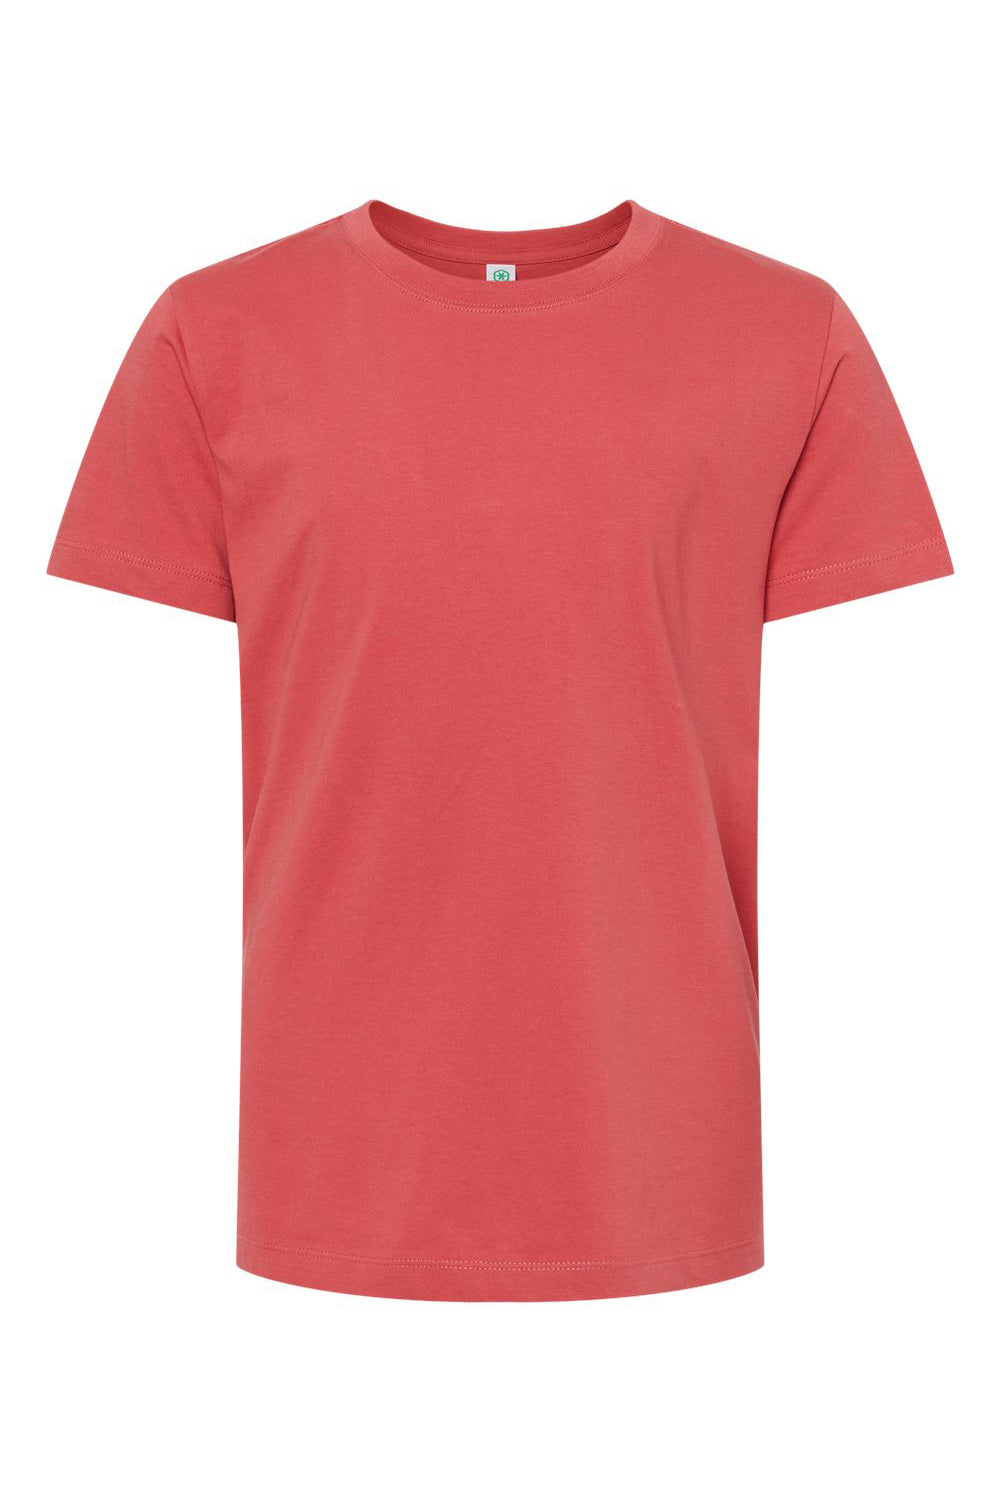 SoftShirts 402 Youth Organic Short Sleeve Crewneck T-Shirt Brick Flat Front